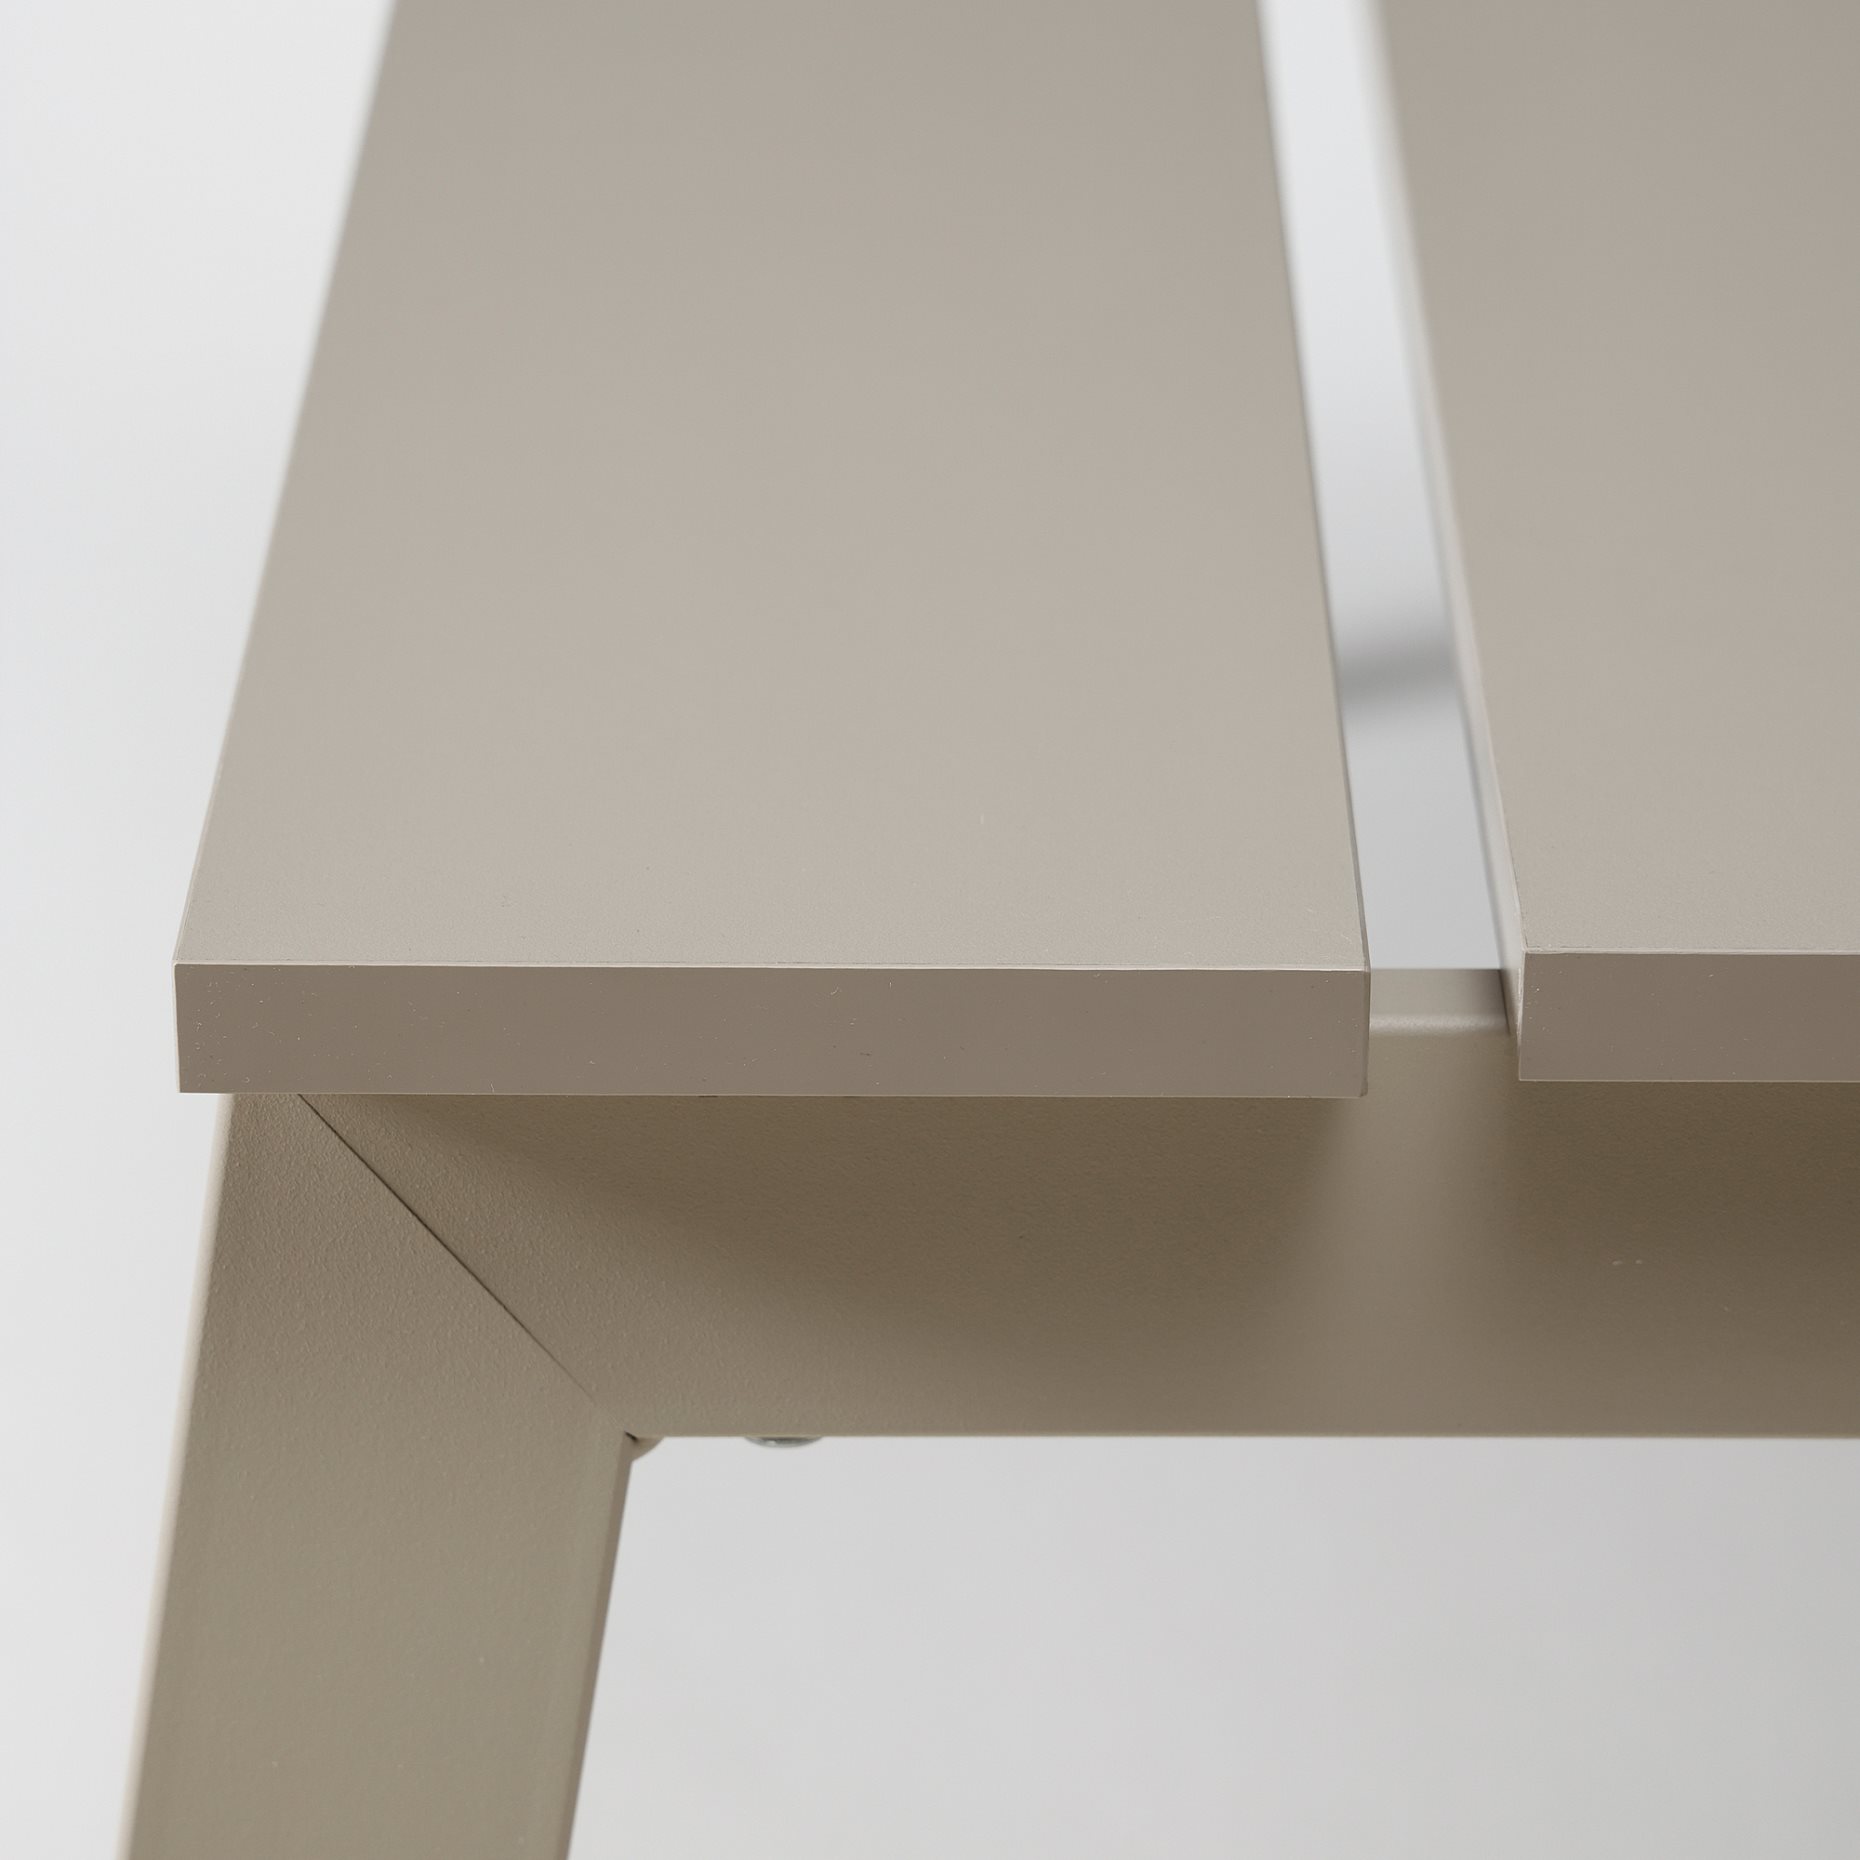 LJUNGSBRO, τραπέζι μέσης/ρυθμιζόμενο, 104x70 cm, 005.610.34